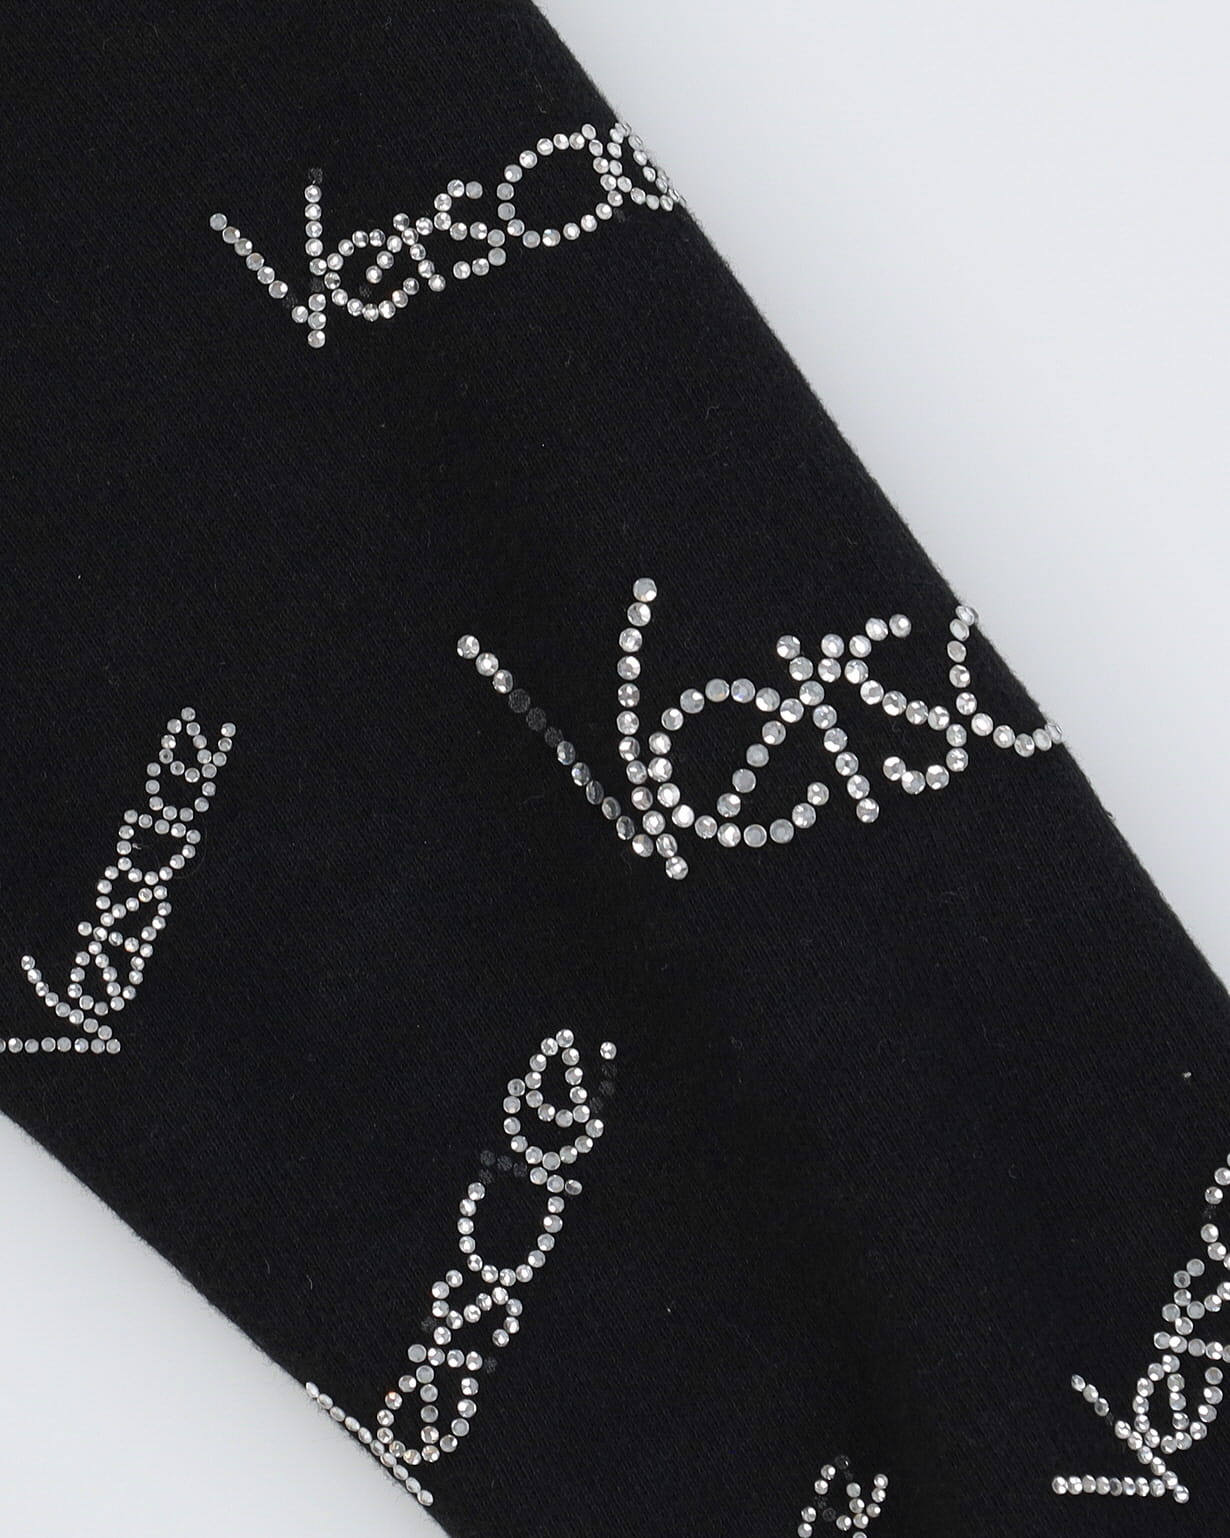 Versace All Over Shiny Logo Black Sweatshirt - S